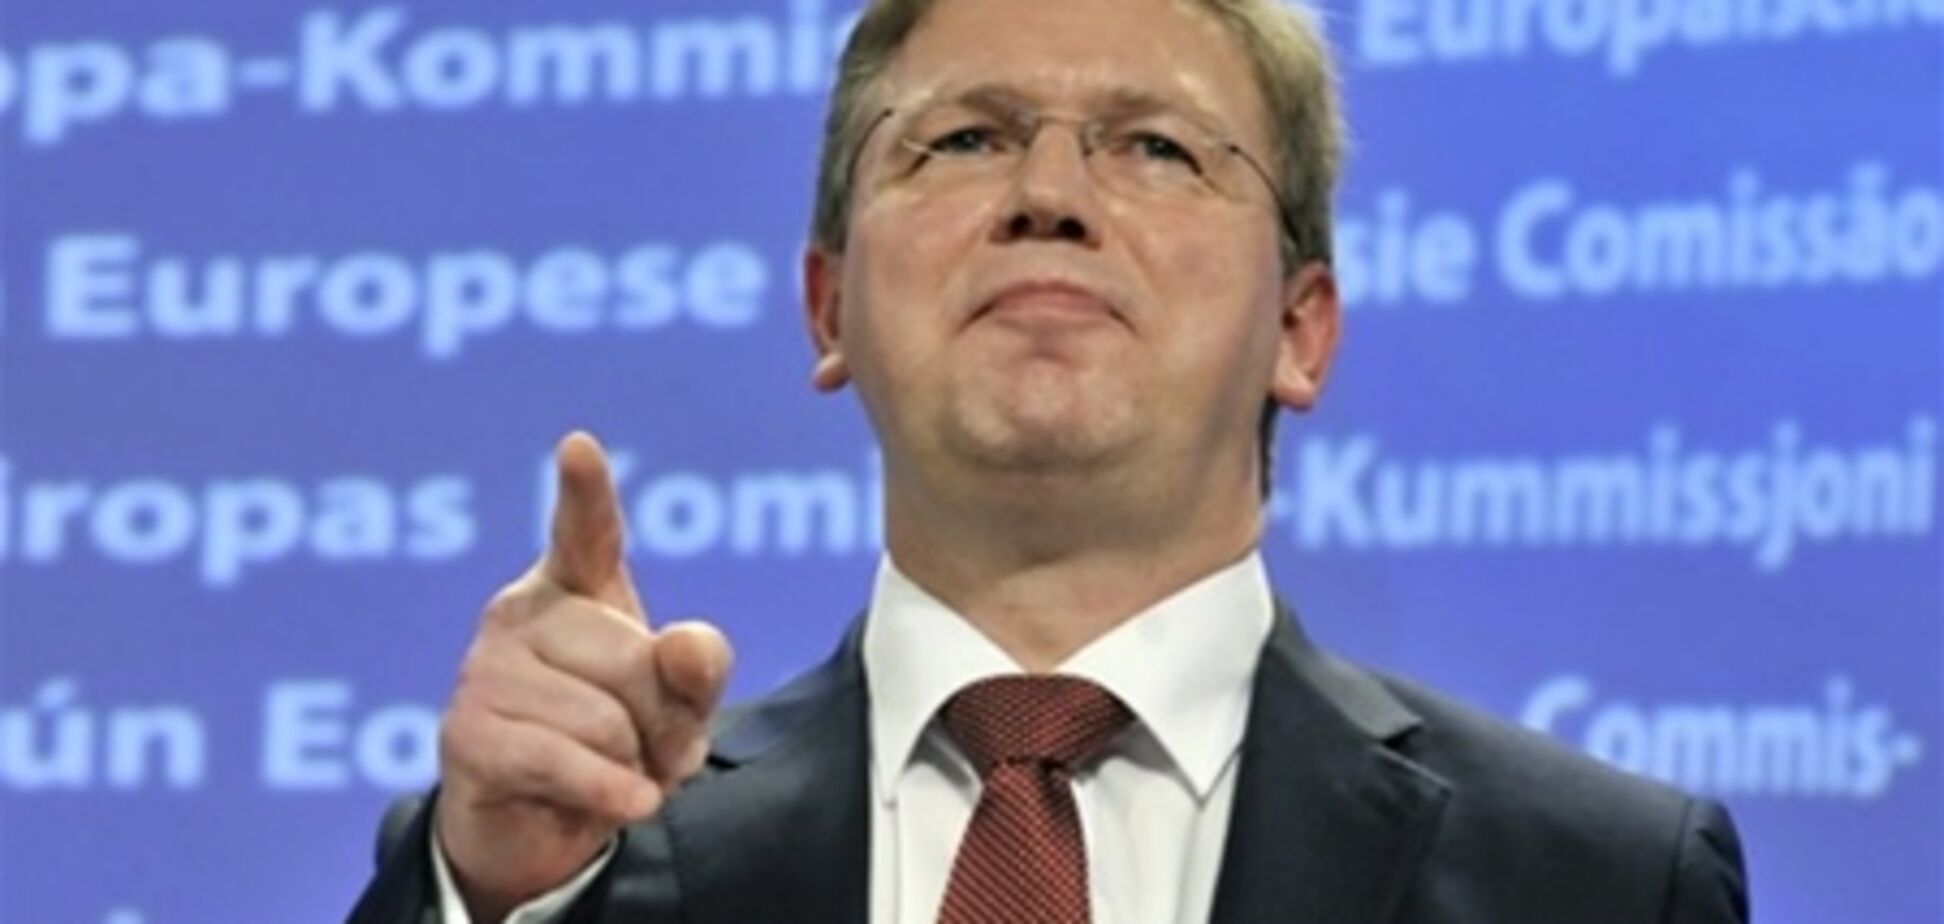 Еврокомиссар Фюле передал слова поддержки Тимошенко